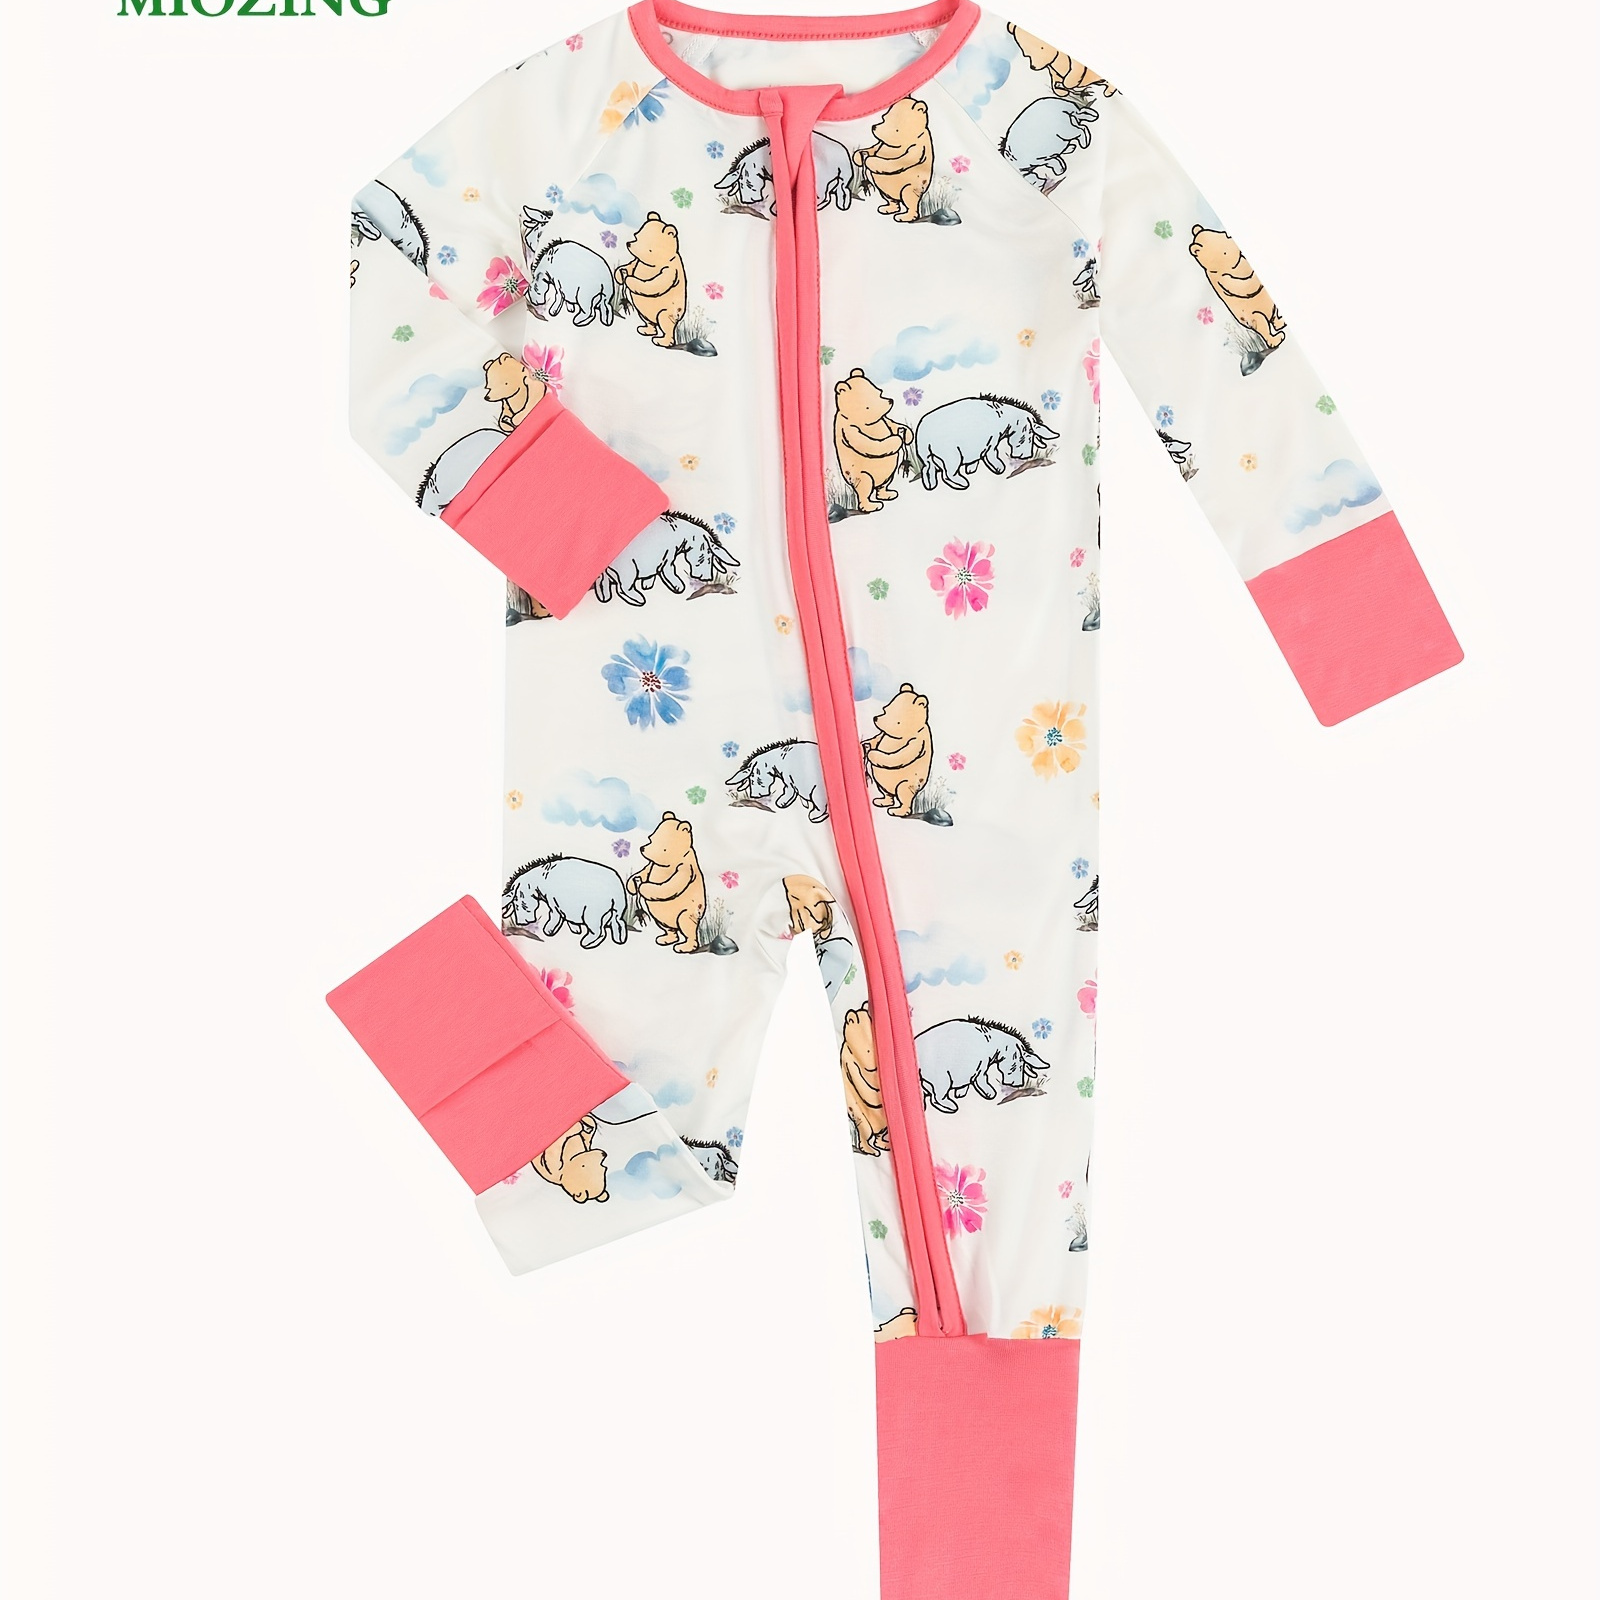 

Miozing Bamboo Fiber Bodysuit For Infants, Cartoon Bear & Flower Pattern Long Sleeve Onesie, Baby Boy's Clothing